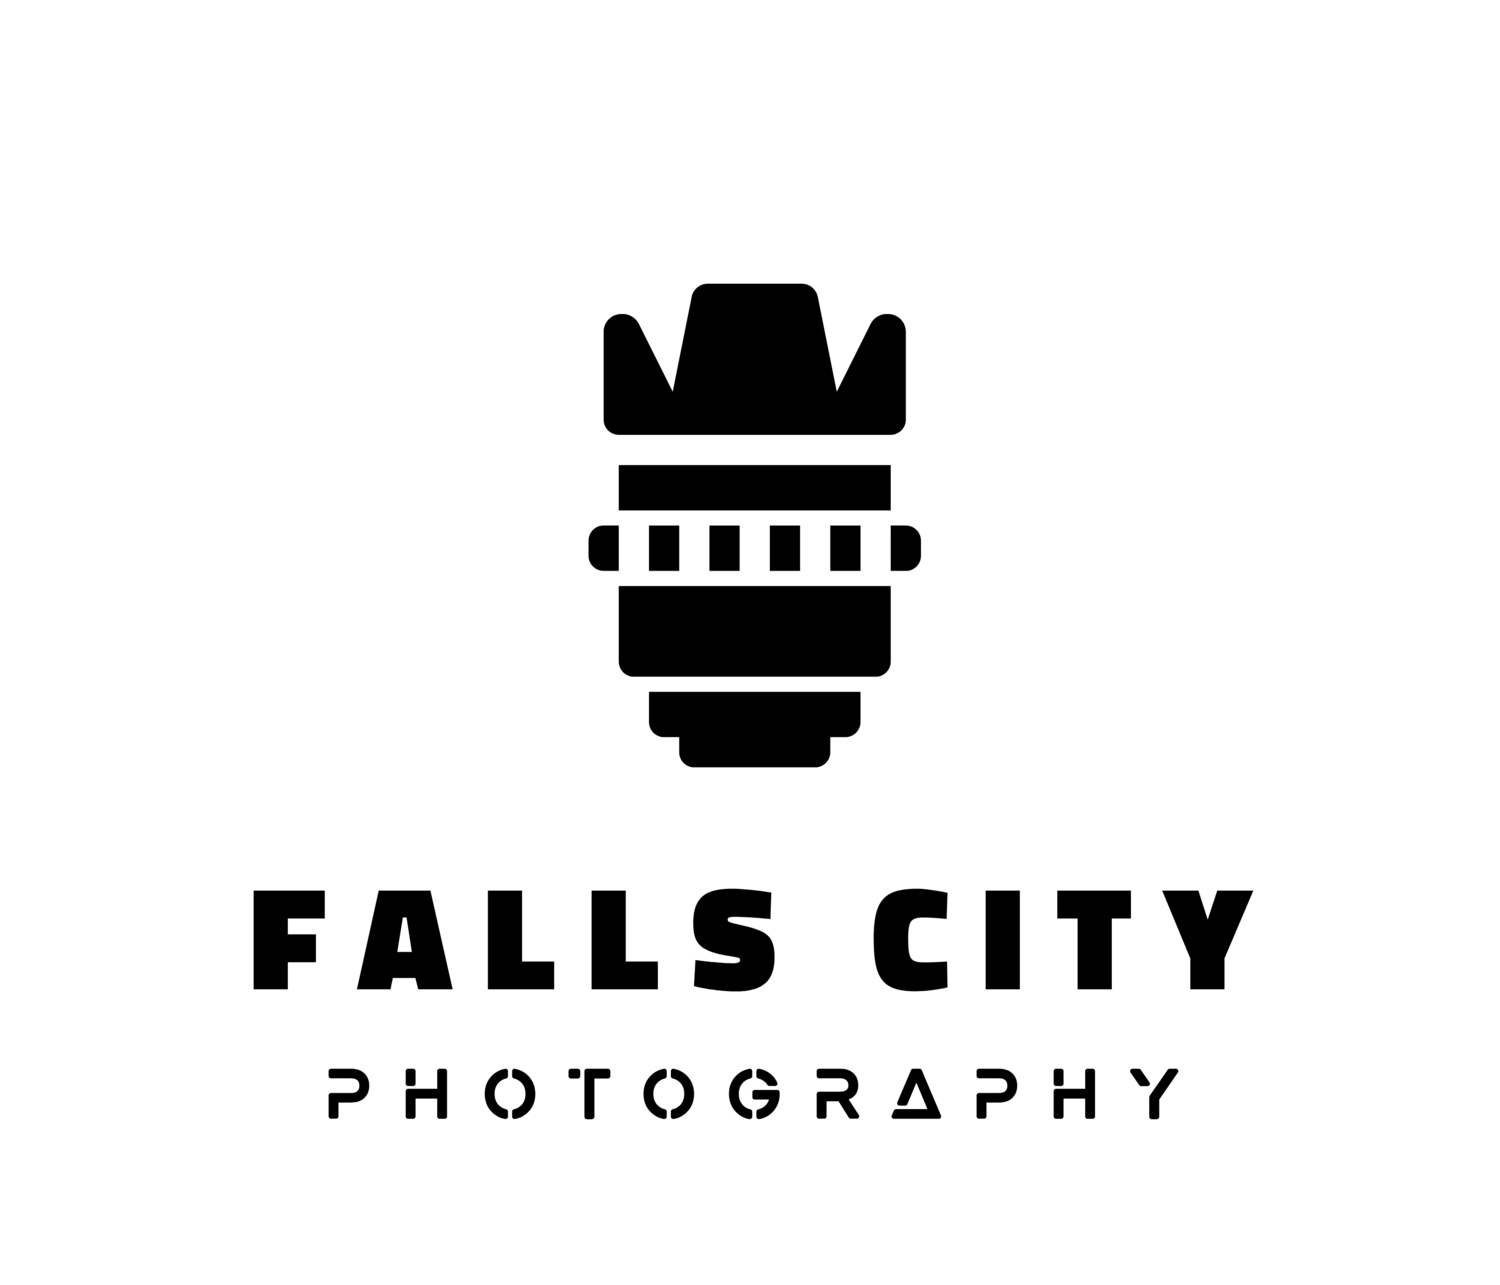 Falls City Photography